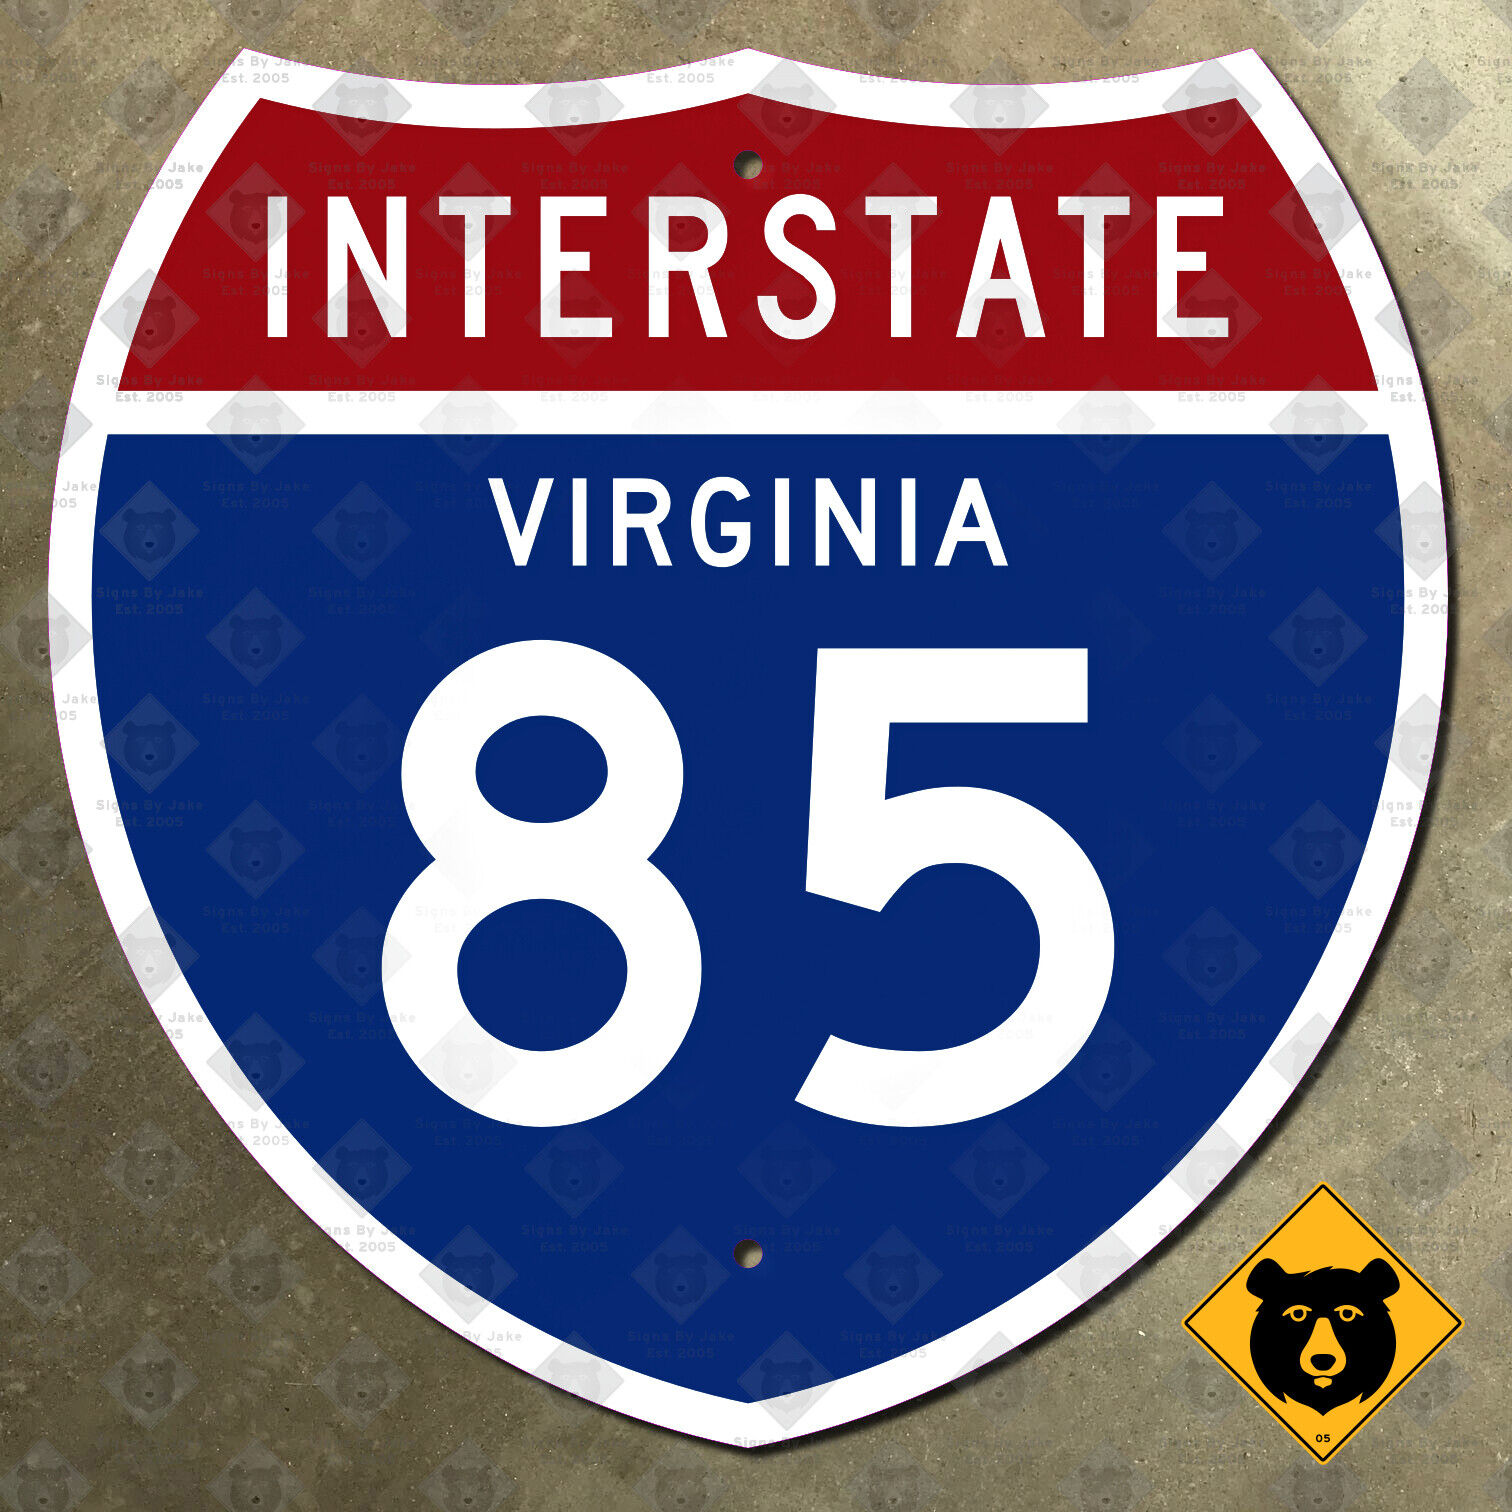 Virginia Interstate 85 highway route sign shield marker 1985 Petersburg 18x18